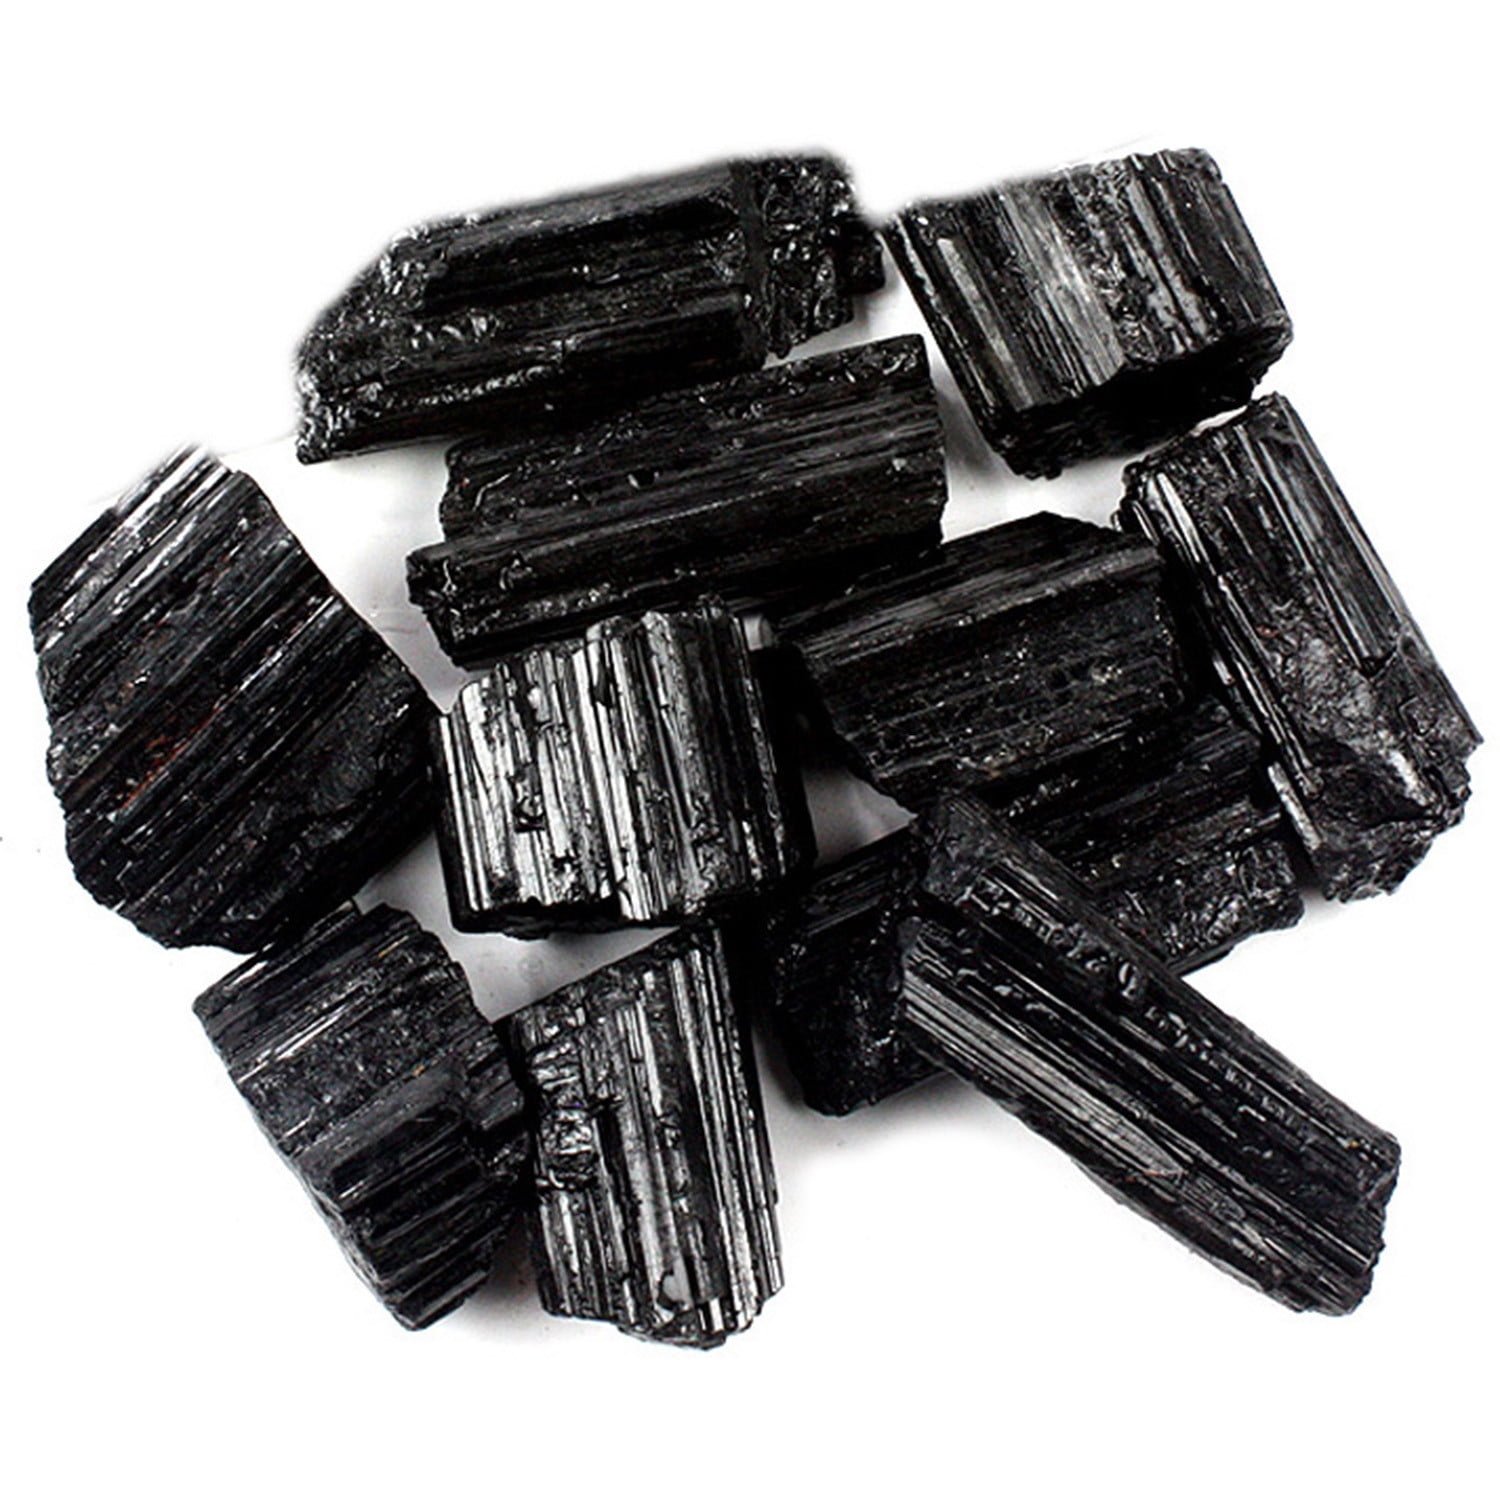 Crystal Allies Materials: Bulk Rough Black Tourmaline Crystals from Brazil  - Large 1&quot; Raw Natural Stones for Cabbing, Cutting, Lapidary, Tumbling, and  Polishing &amp; Reiki Crystal HealingWholesale Lot - Walmart.com